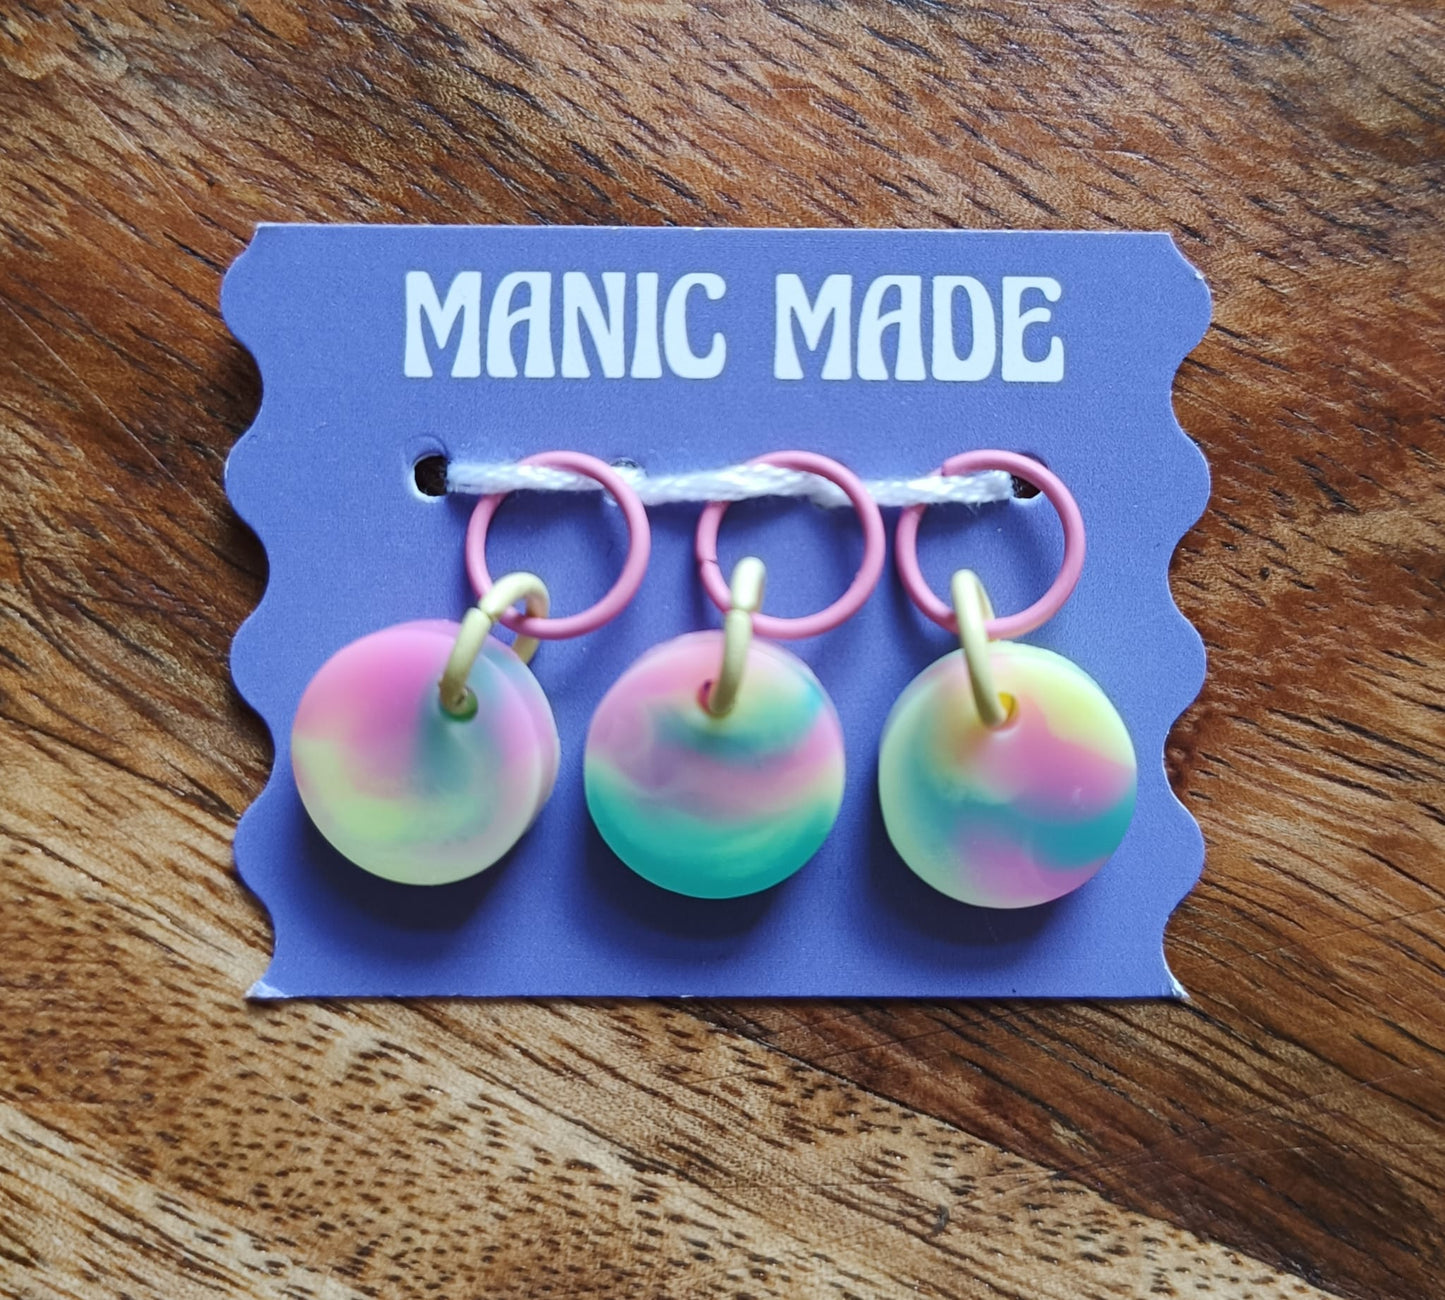 Manic Made Stitch Markers - Set of 3